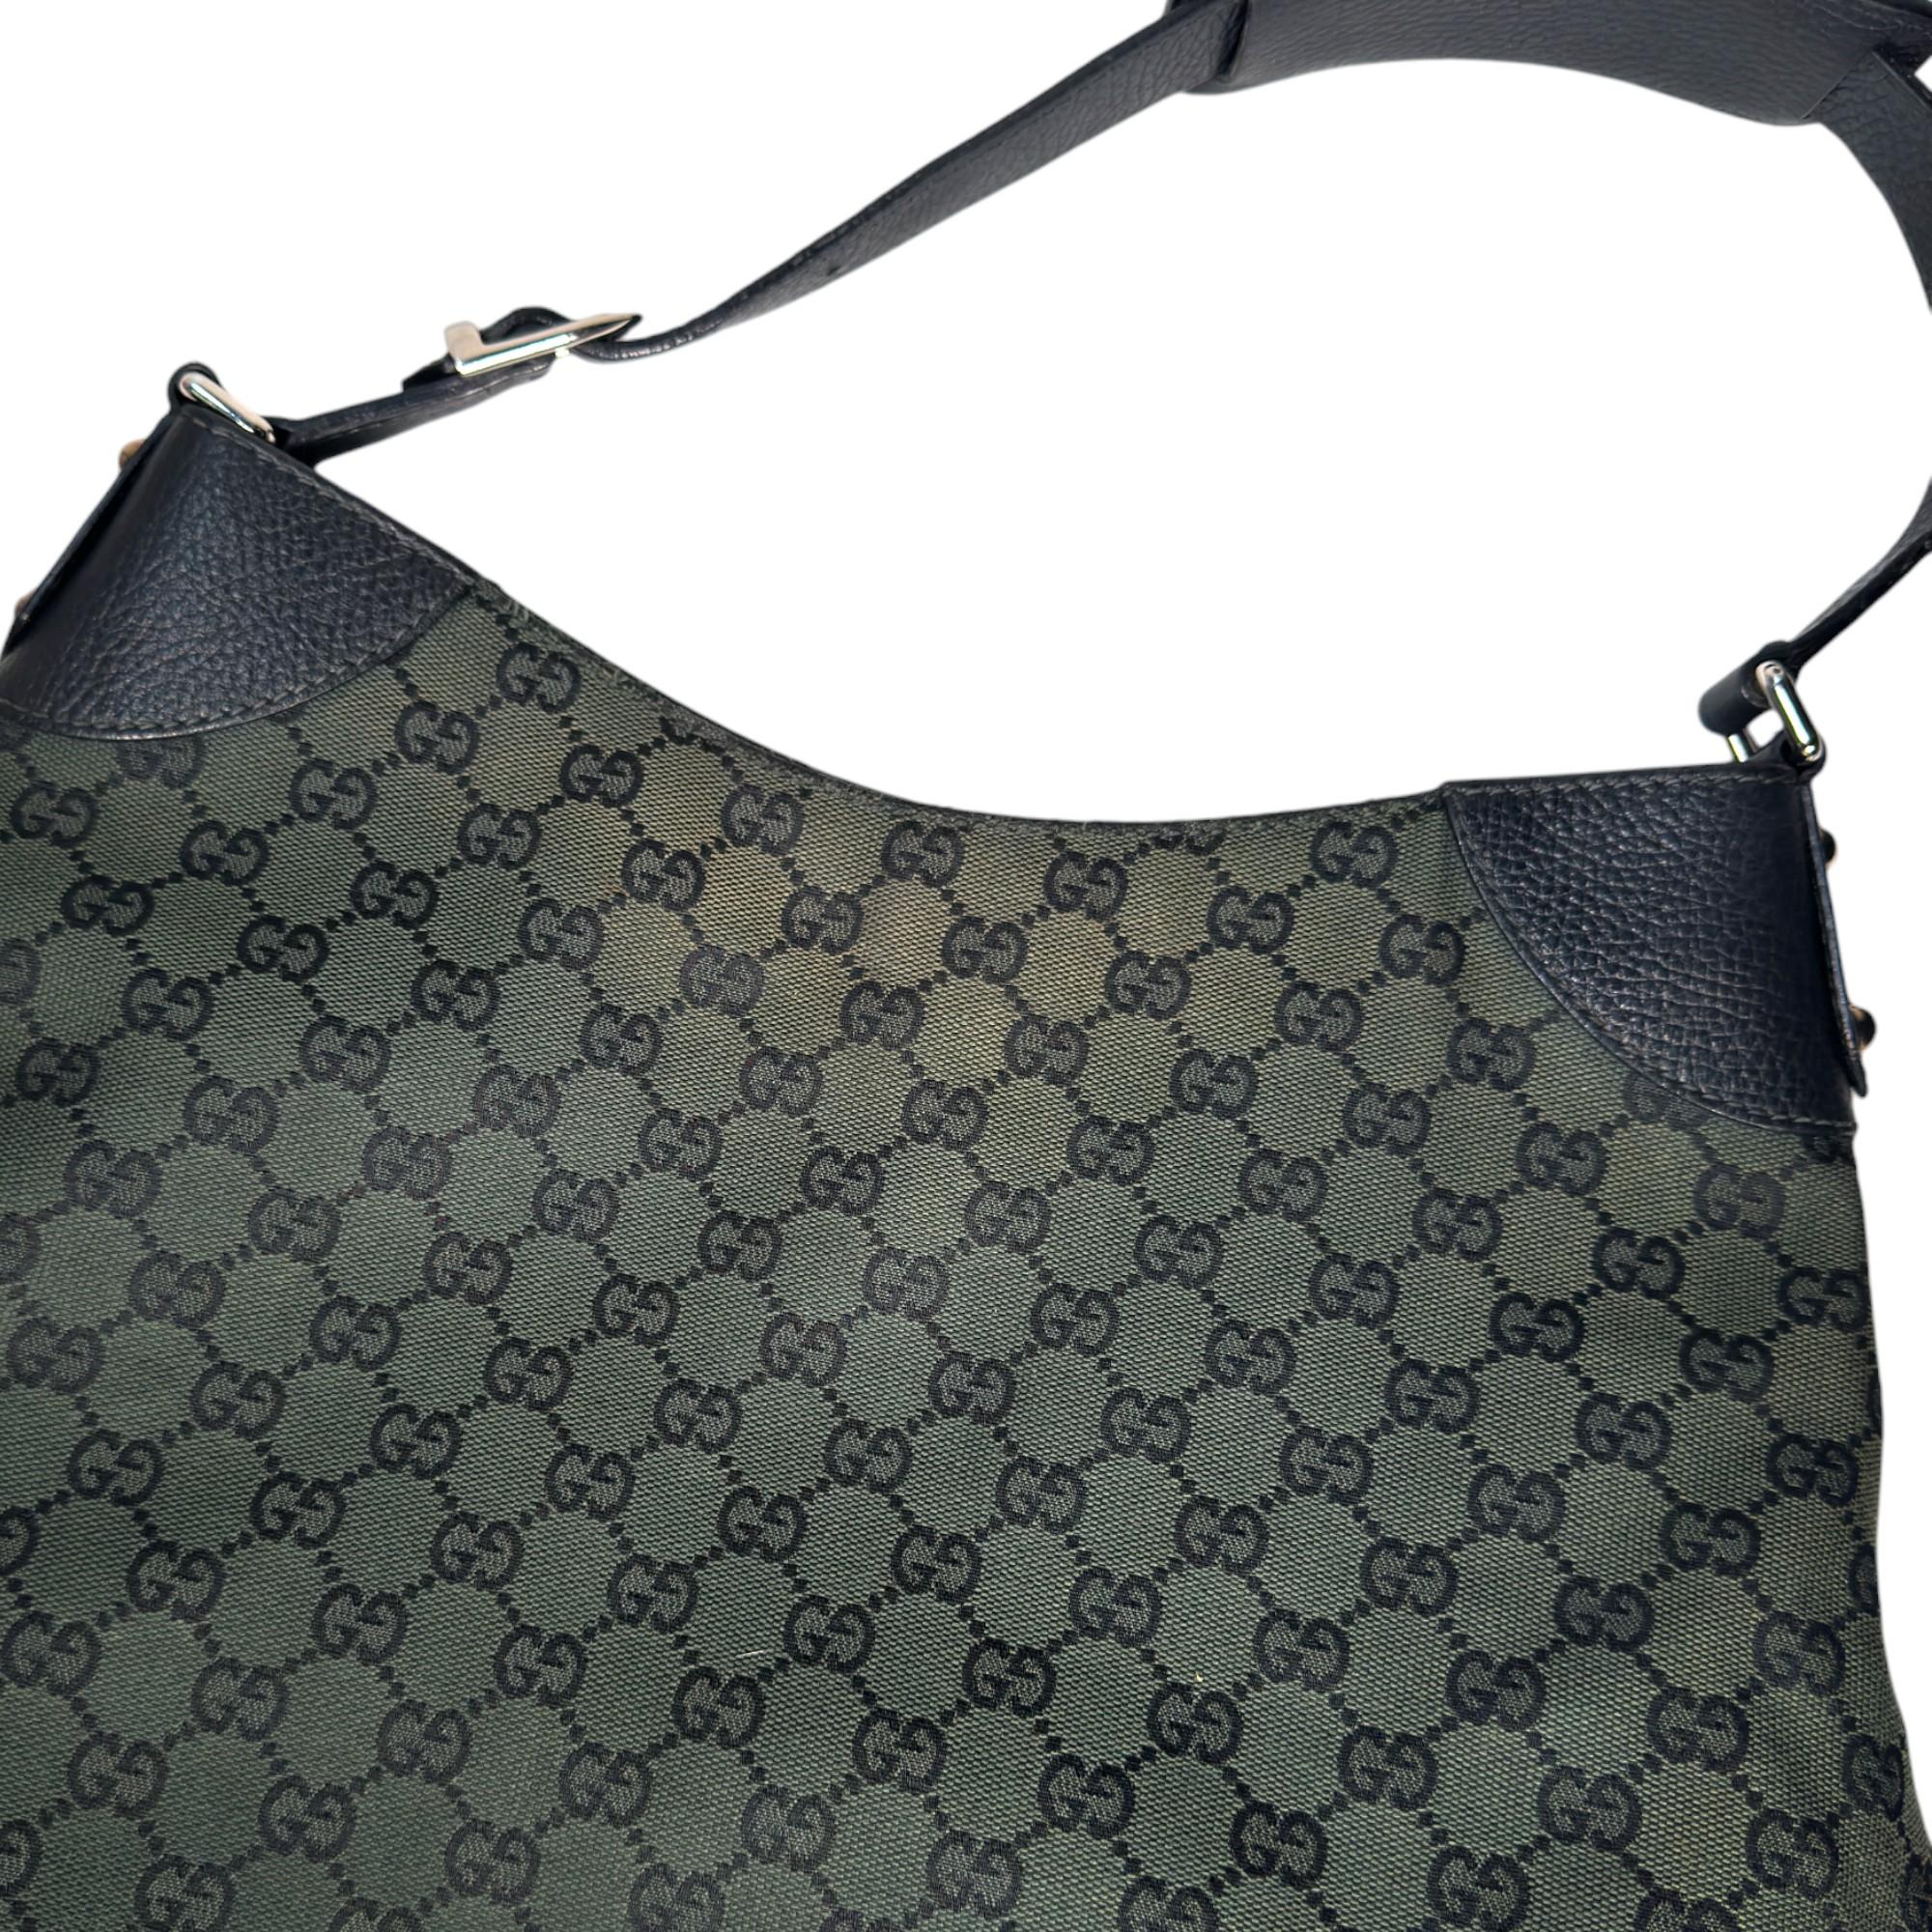 Authentic estate Gucci Monogram Green Canvas hobo shoulder bag